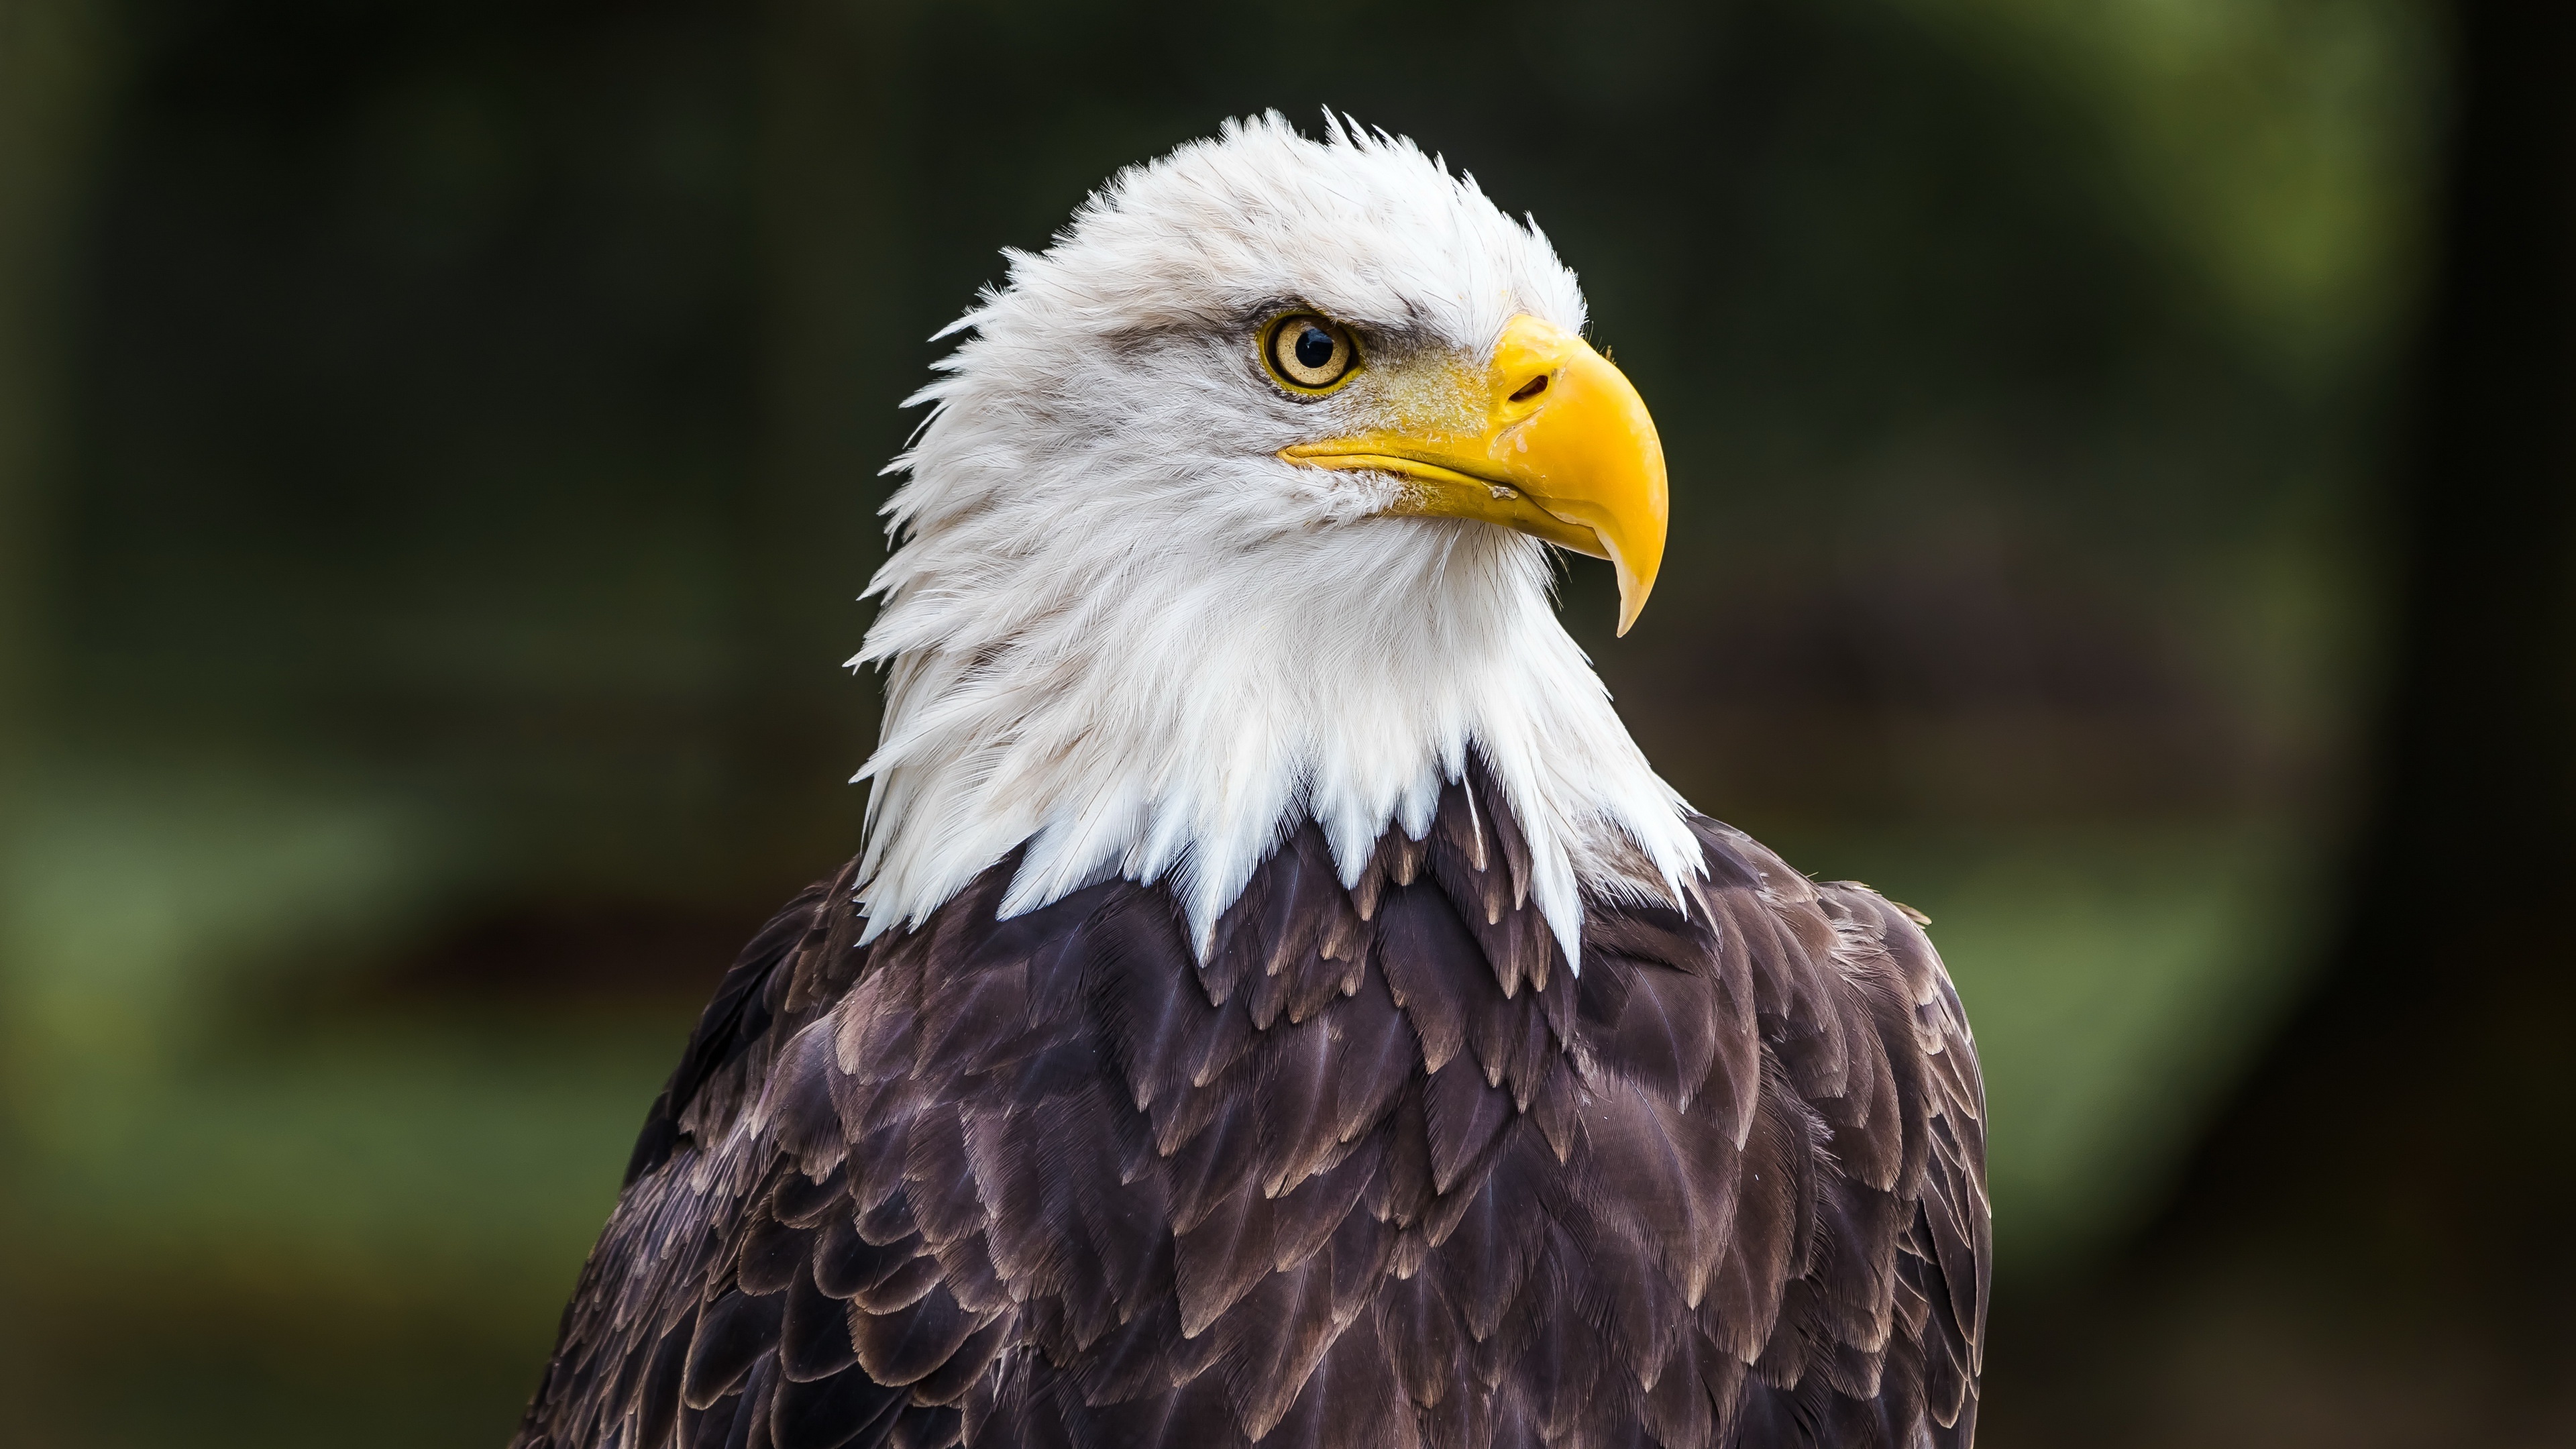 Bald eagle 4K wallpaper, Ultra HD, Nature's beauty, Wildlife, 3840x2160 4K Desktop